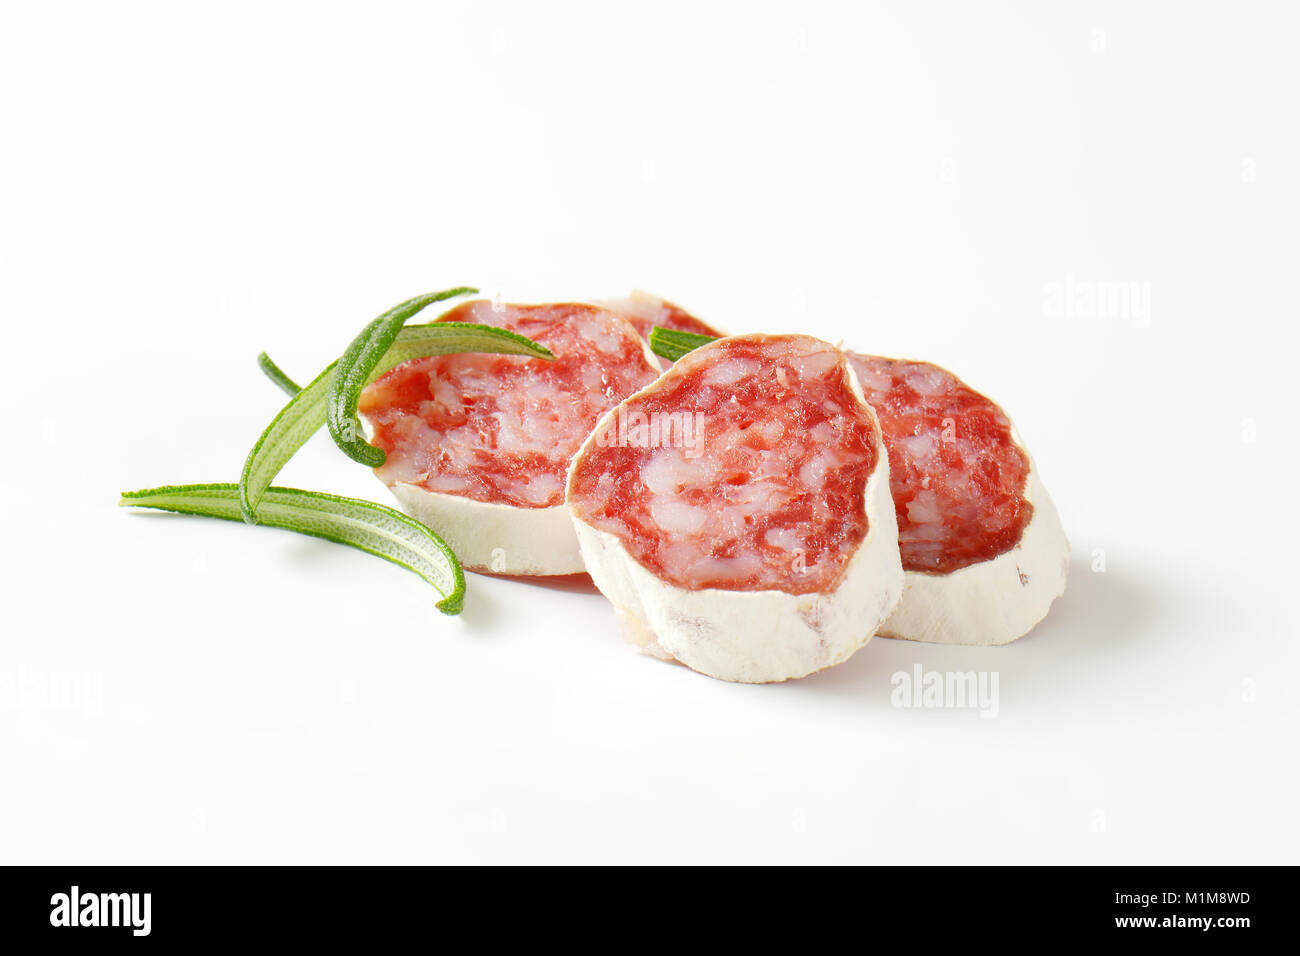 Slices of Spanish thin dried sausage Stock Photo